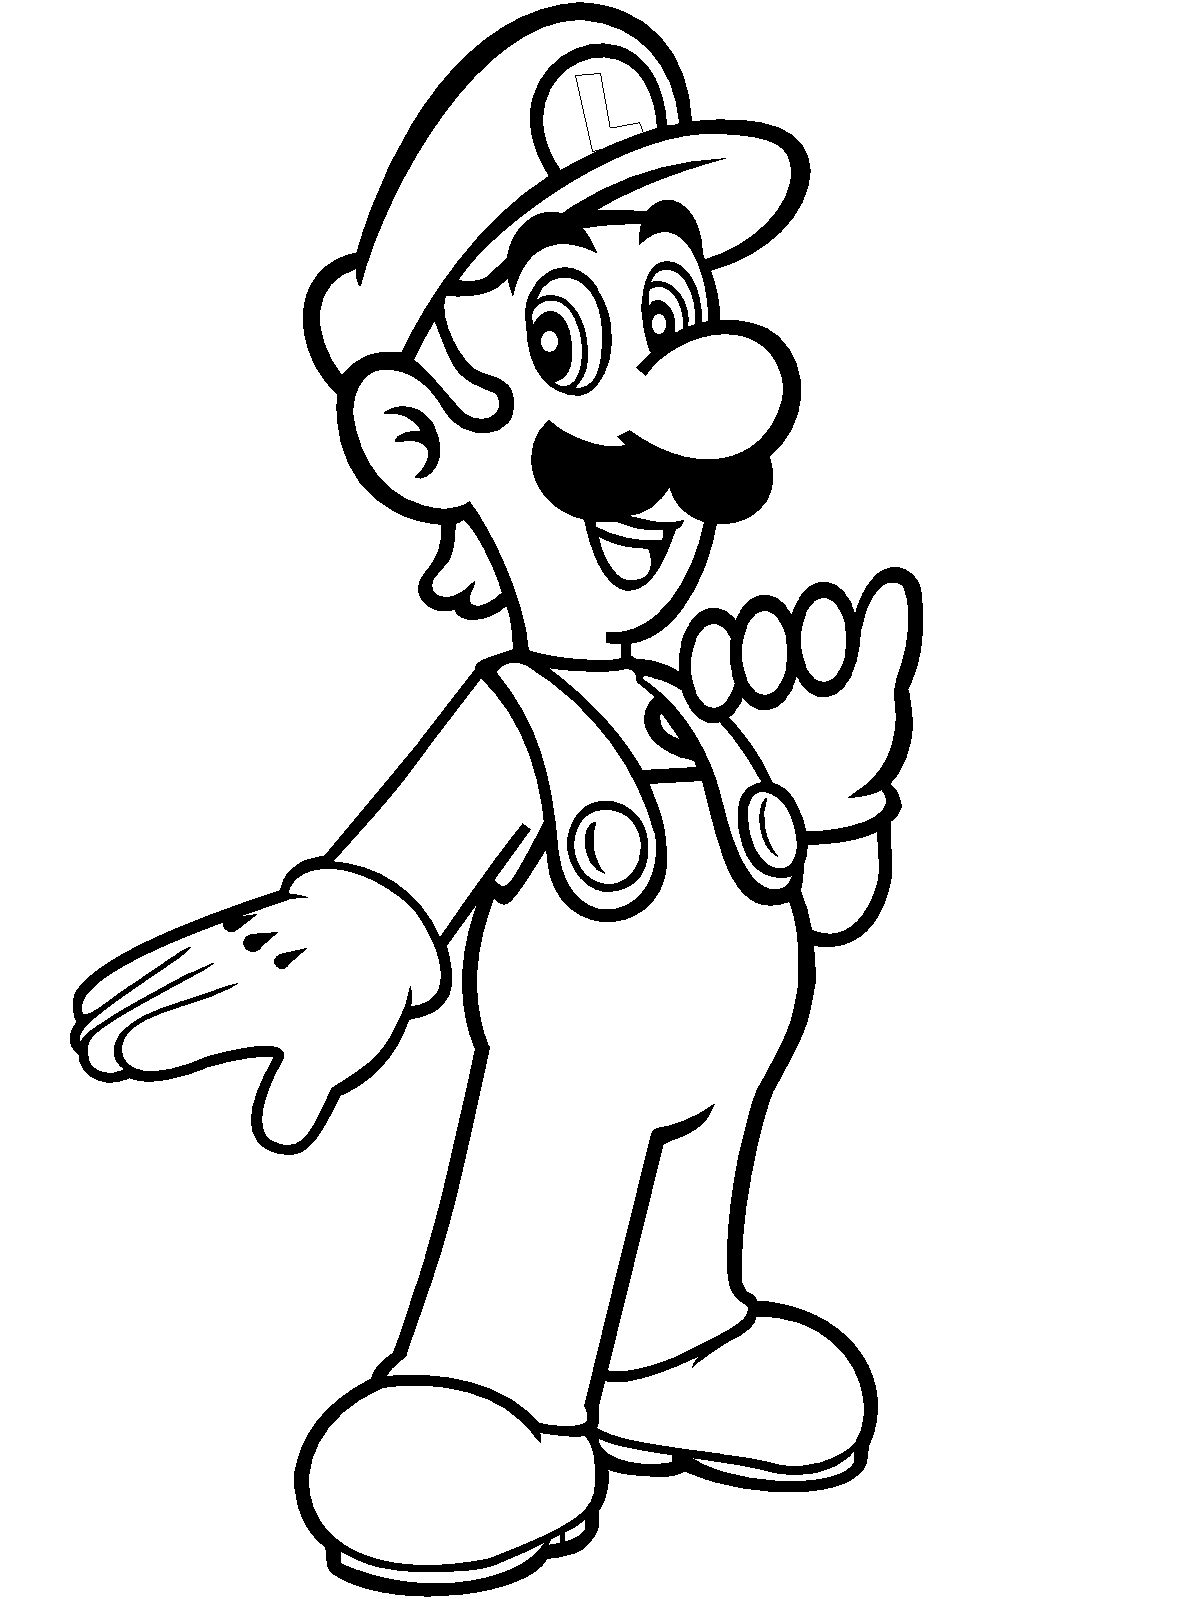 Luigi Coloring Pages Pdf to Print - Luigi From Mario Bros Coloring Page